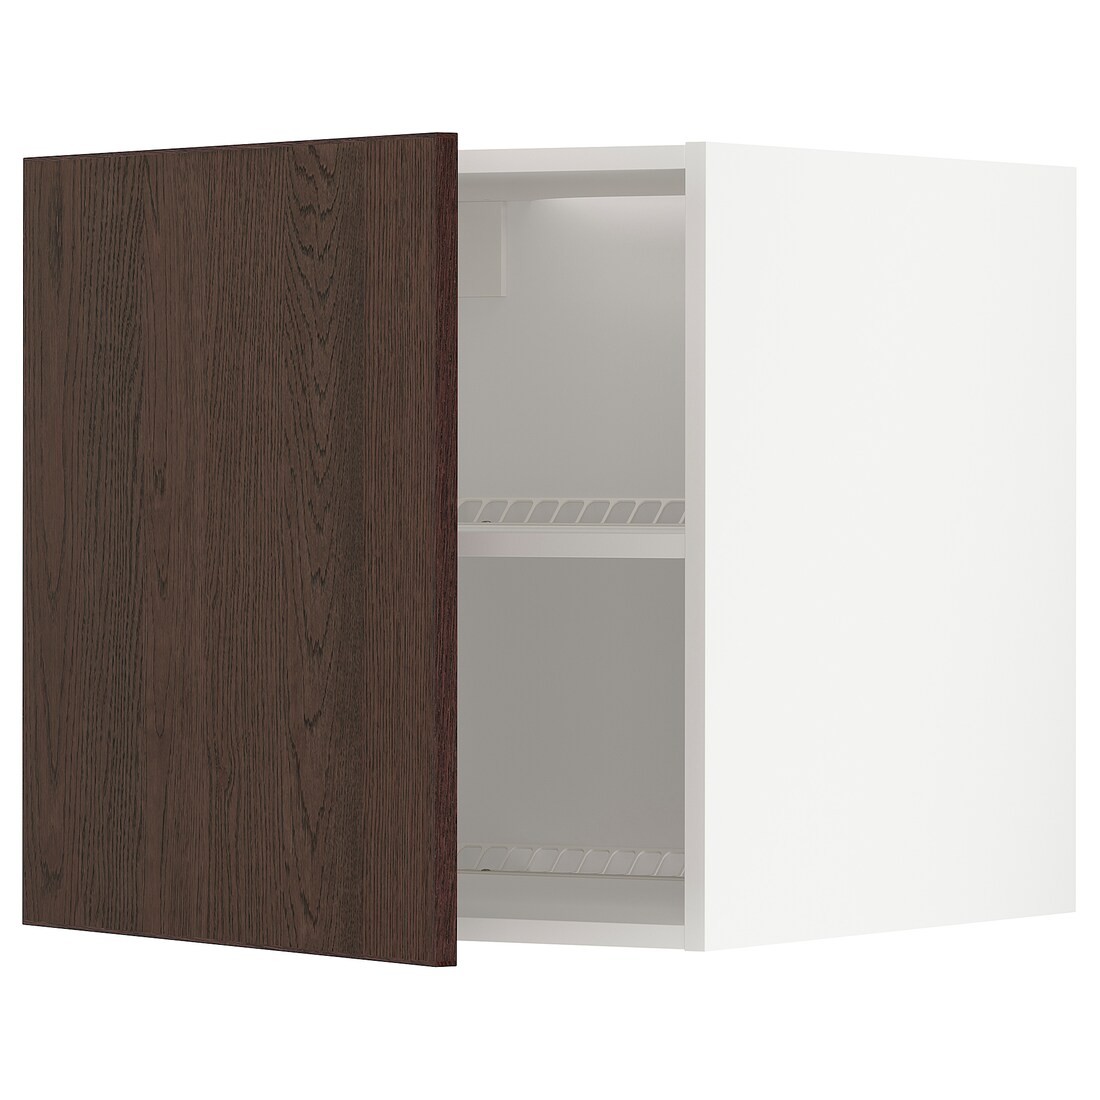 IKEA METOD МЕТОД Верхний шкаф для холодильника / морозильника, белый / Sinarp коричневый, 60x60 см 39469572 394.695.72